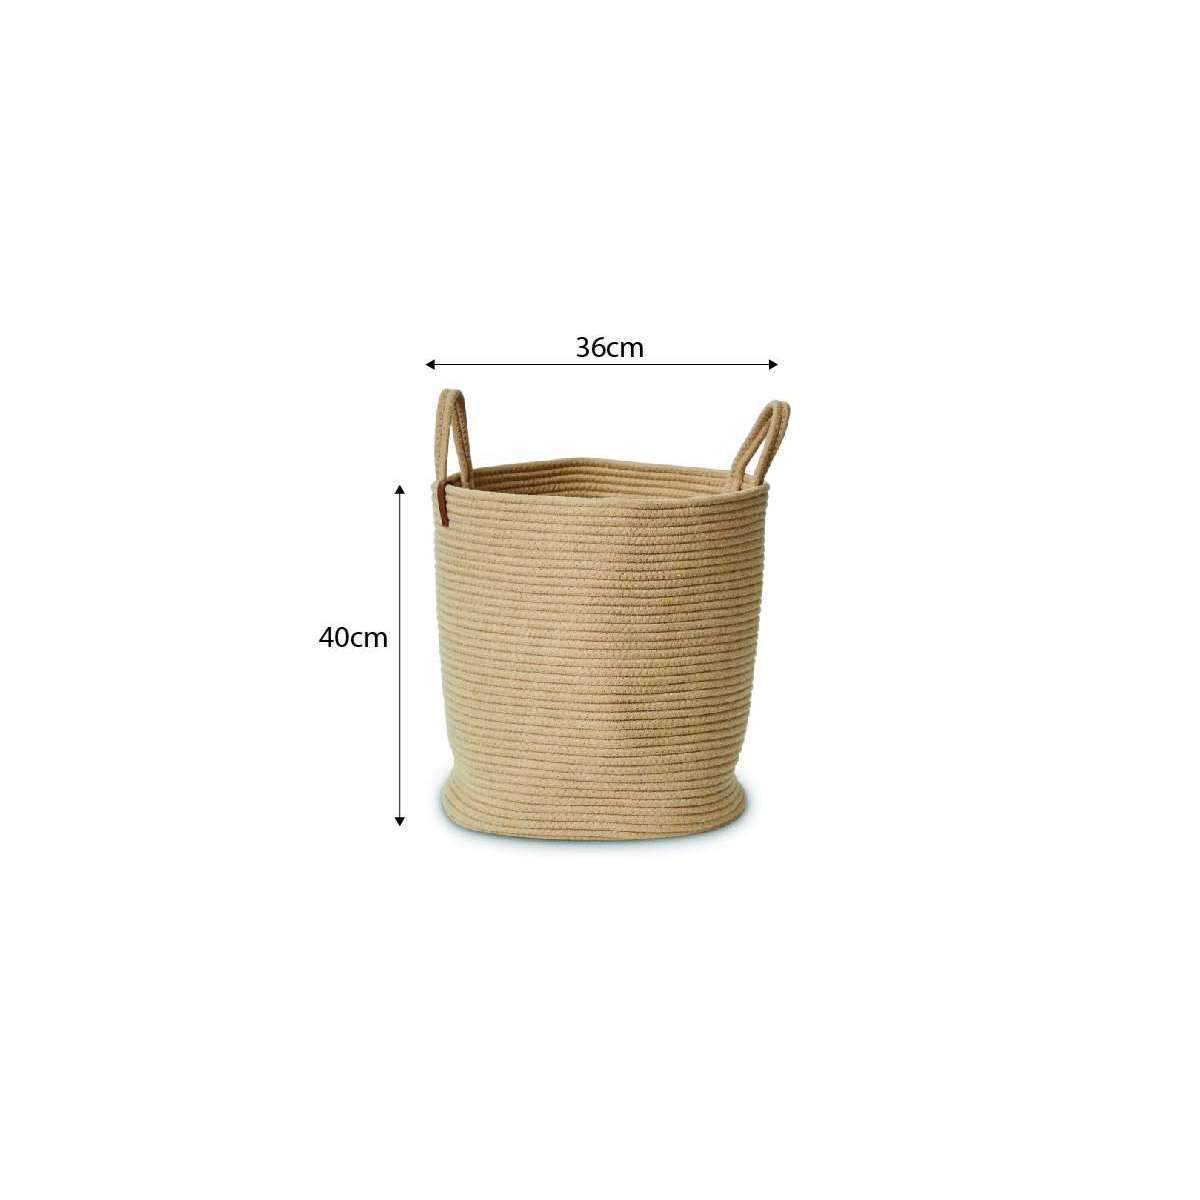 Southampton Cotton Rope Basket - Natural